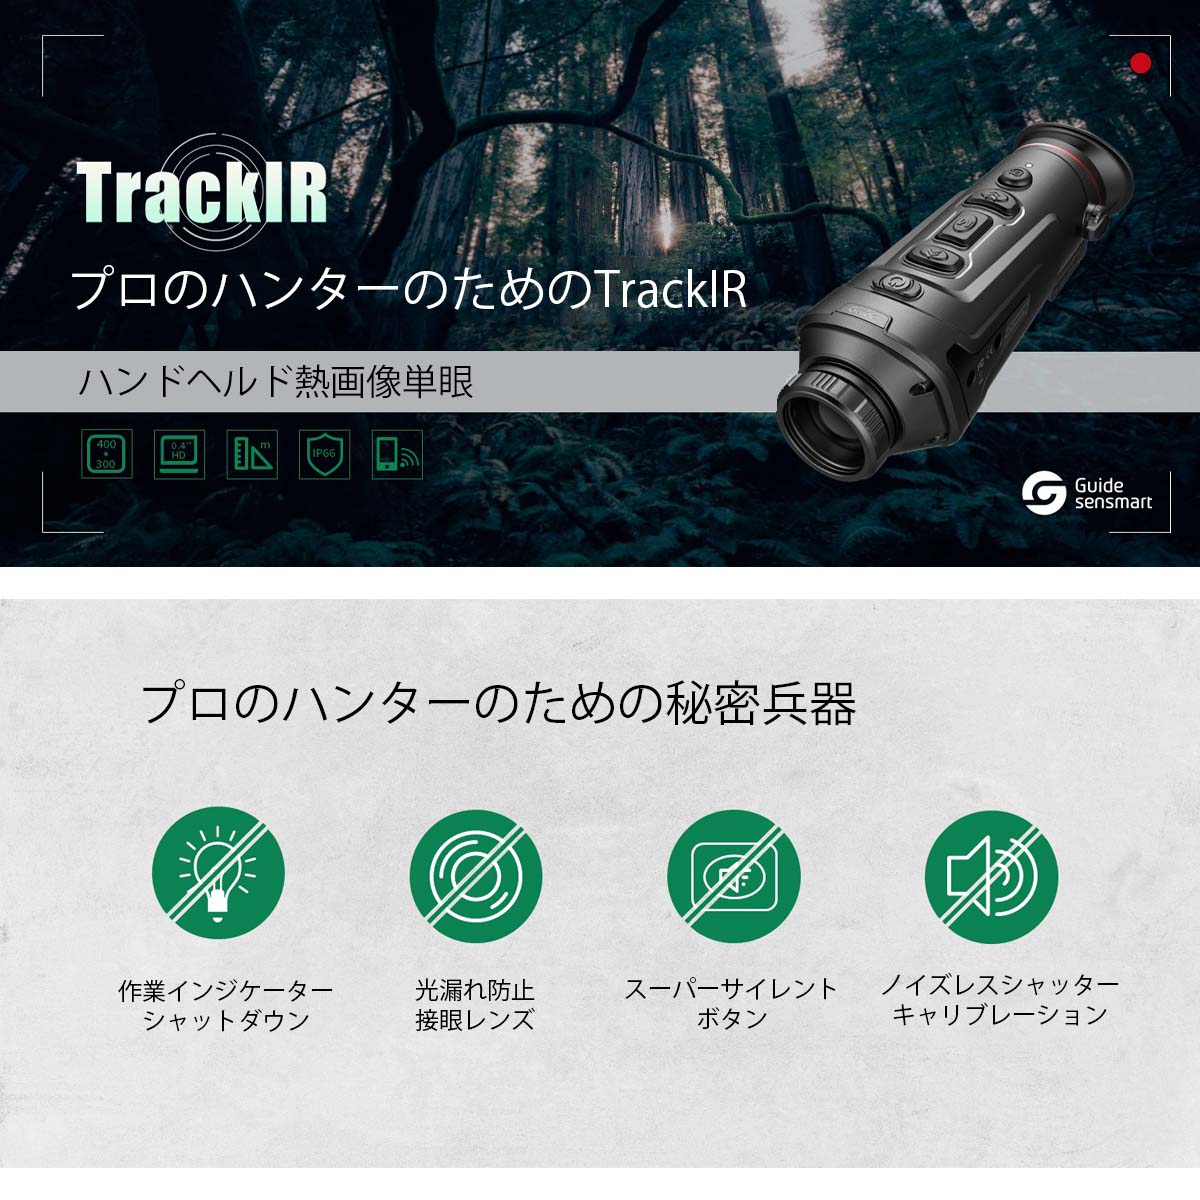 TrackIR-25mm